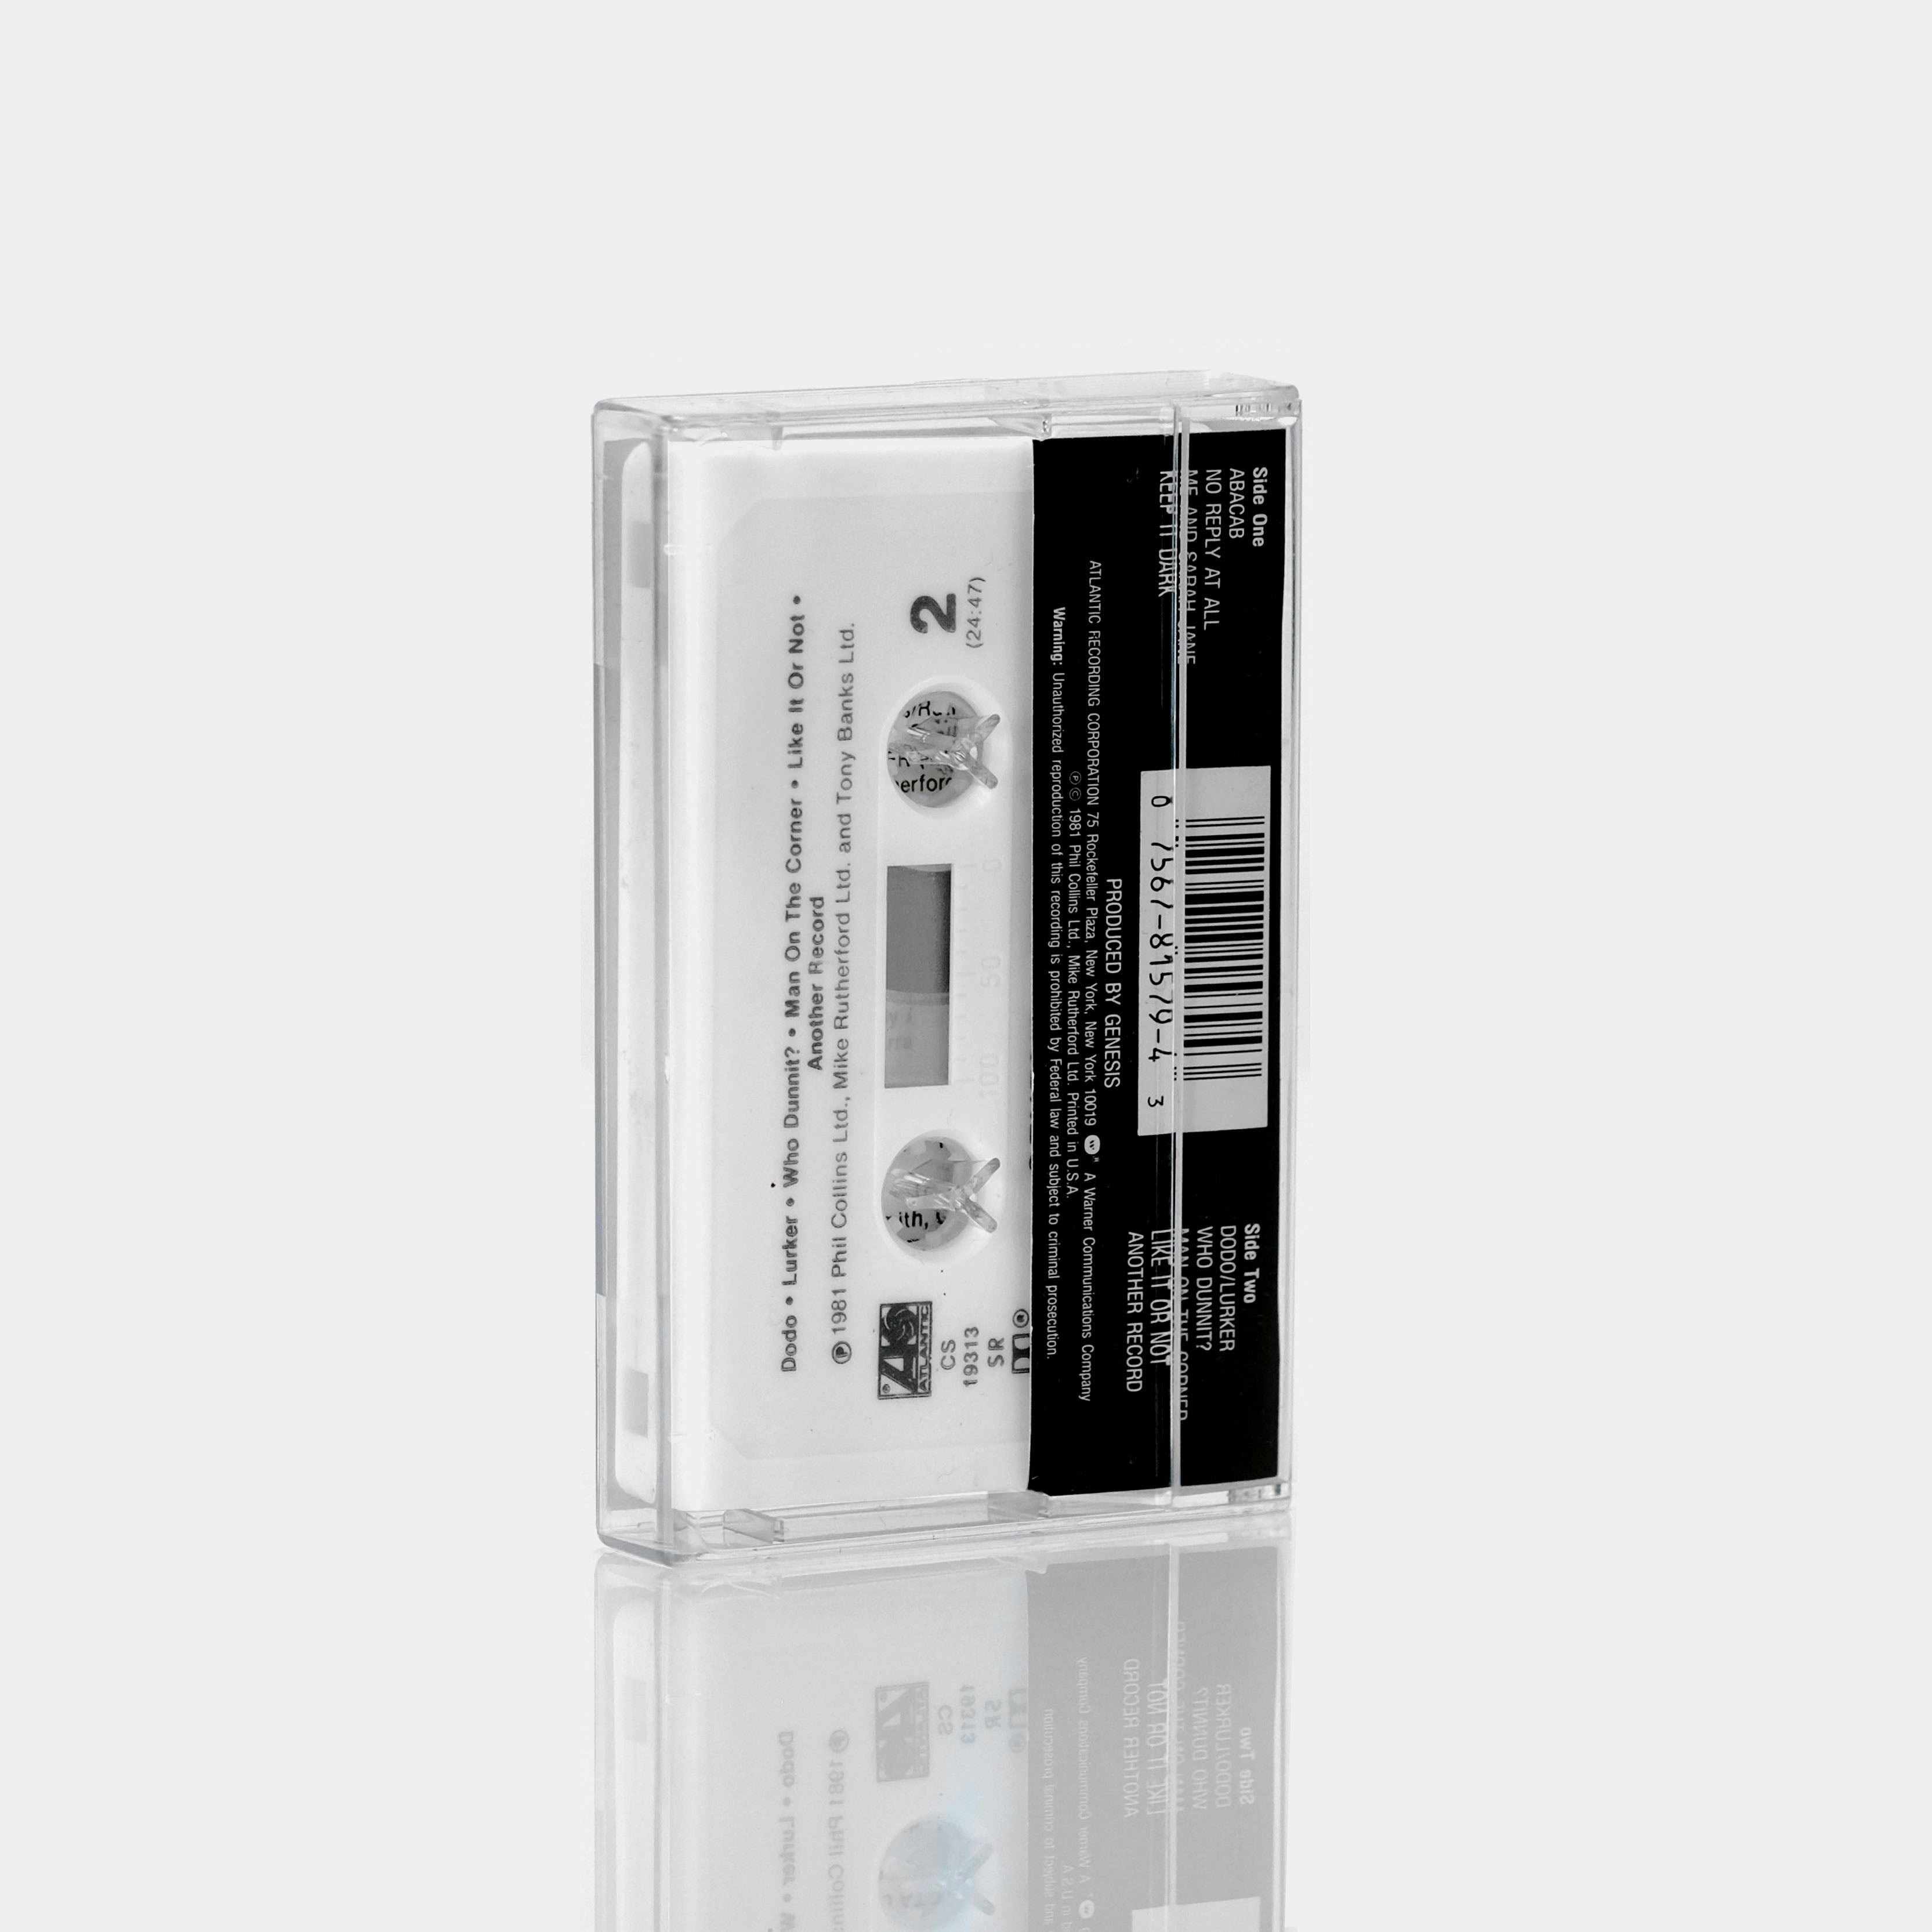 Genesis - Abacab Cassette Tape